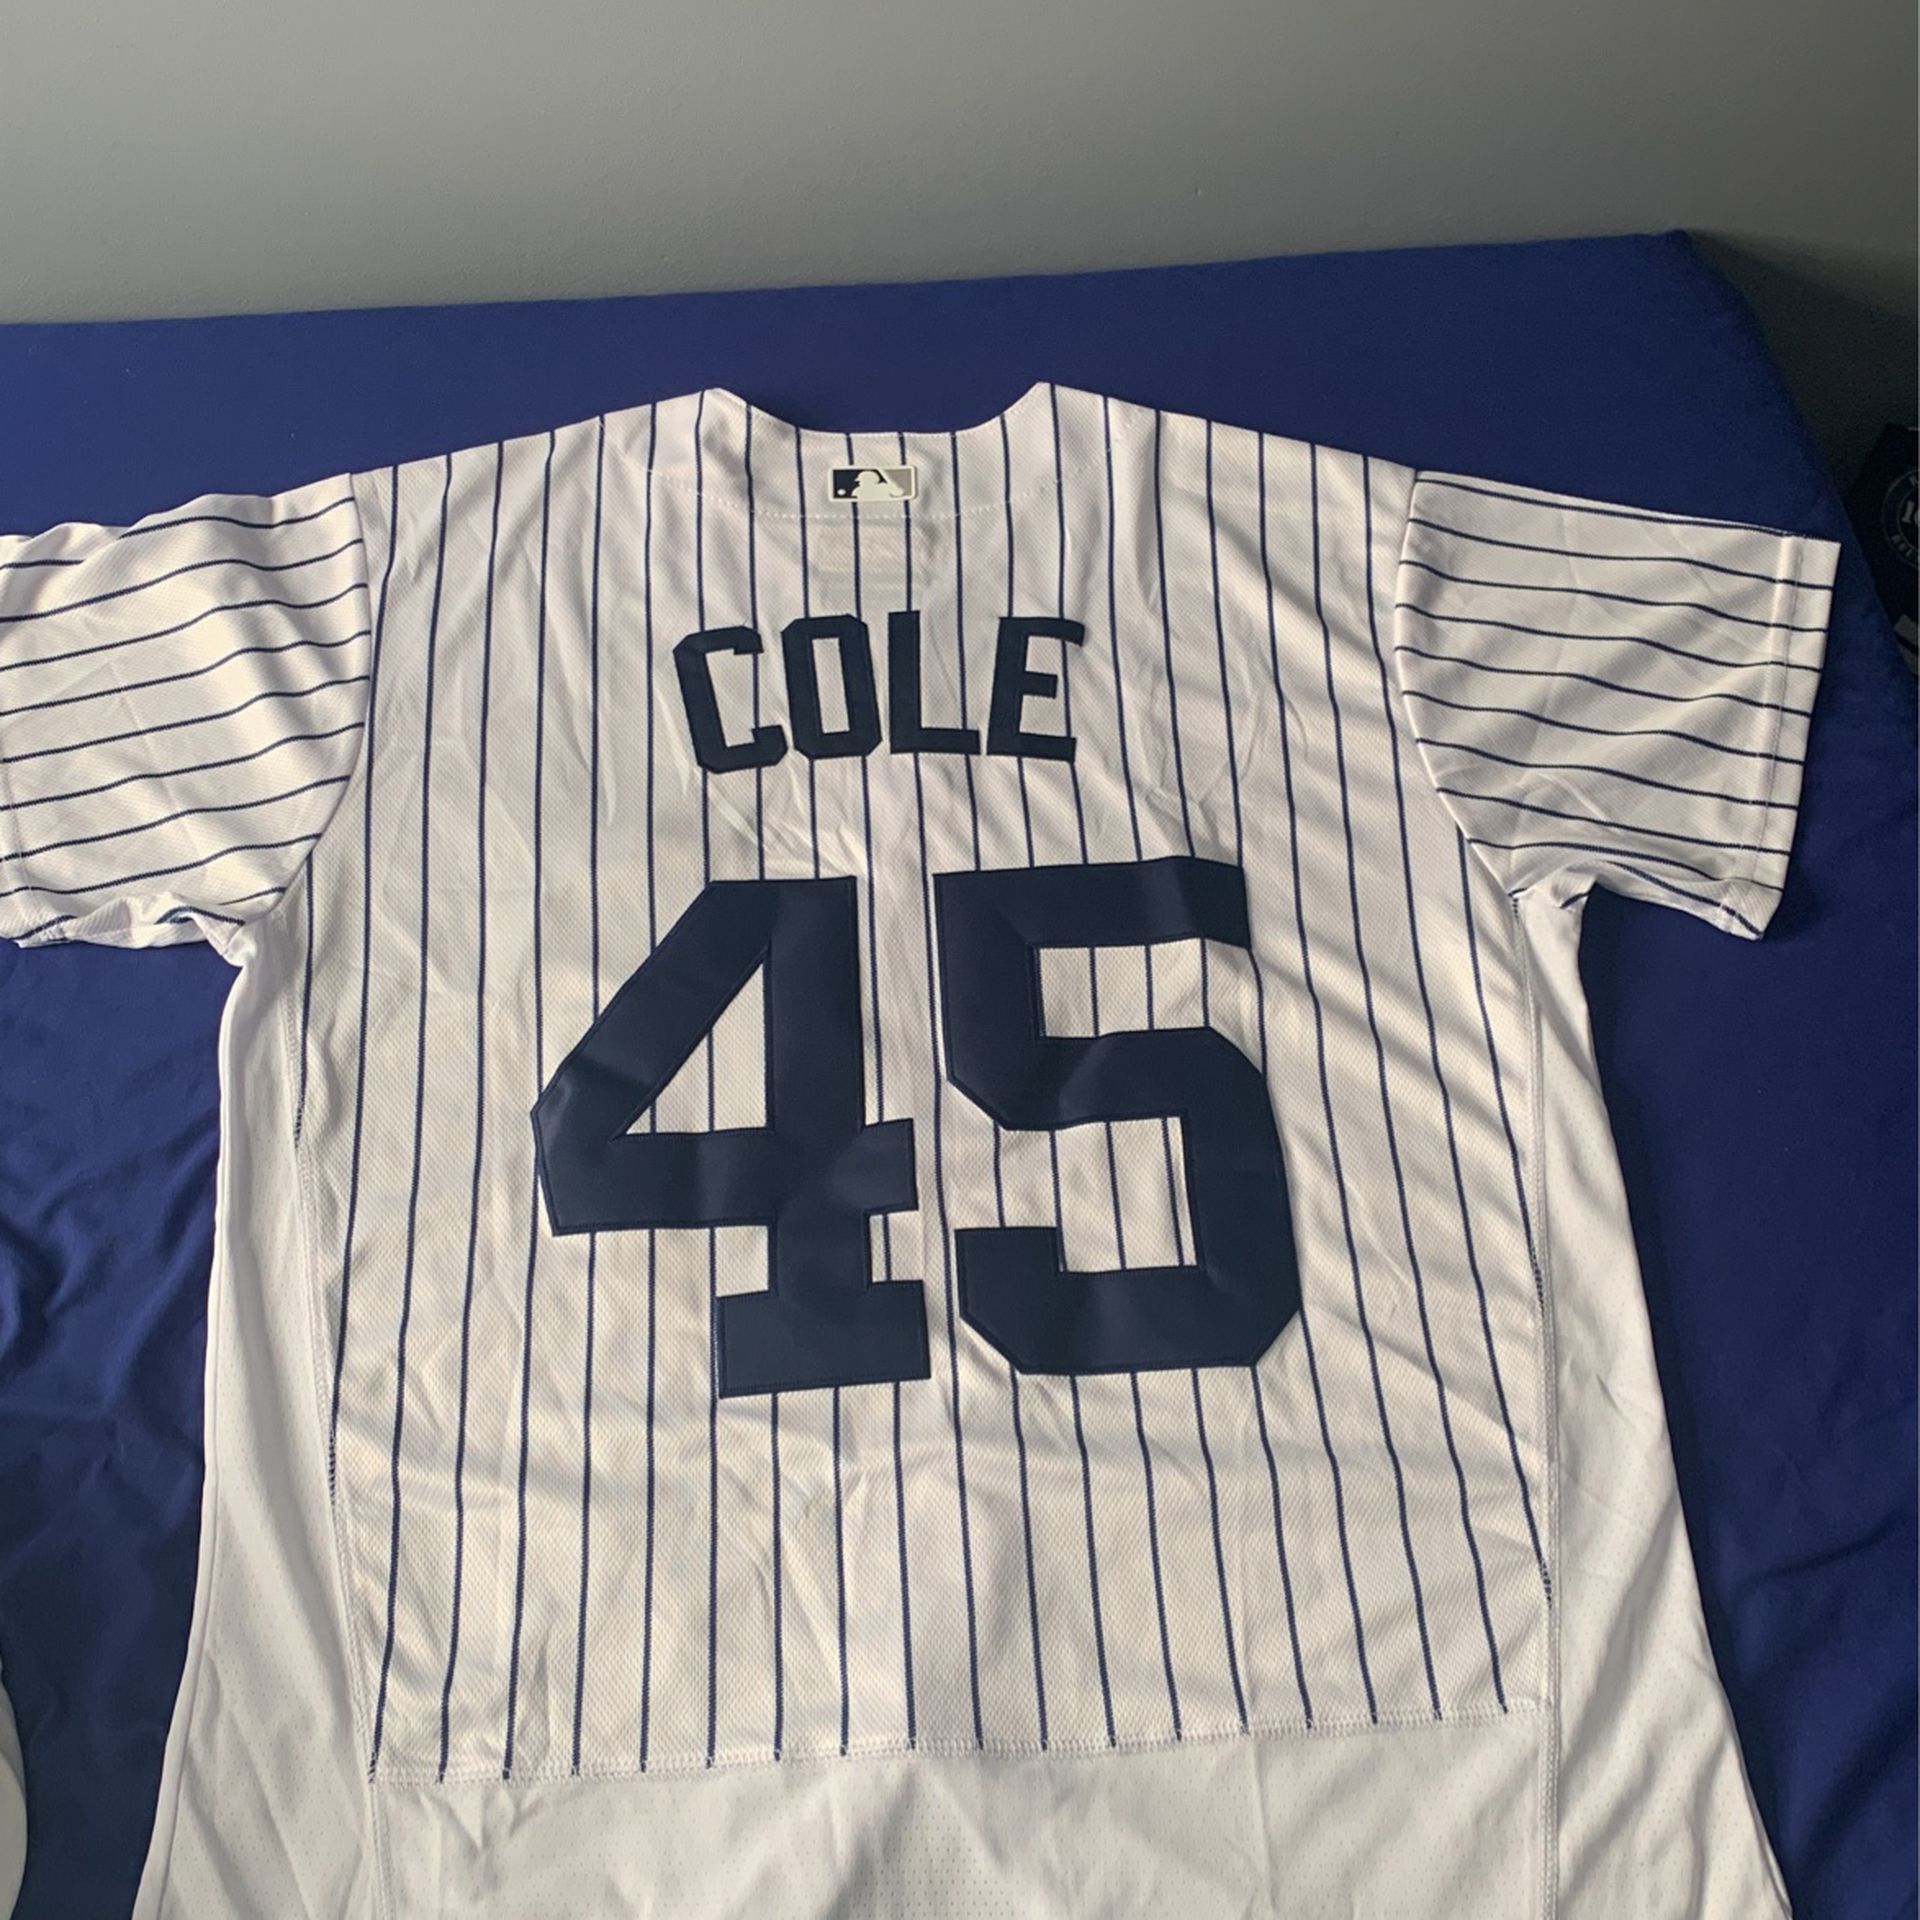 MLB Baseball Gerrit Cole New York Yankees Jersey 45 Flex Base Size Adult  Medium for Sale in North Massapequa, NY - OfferUp